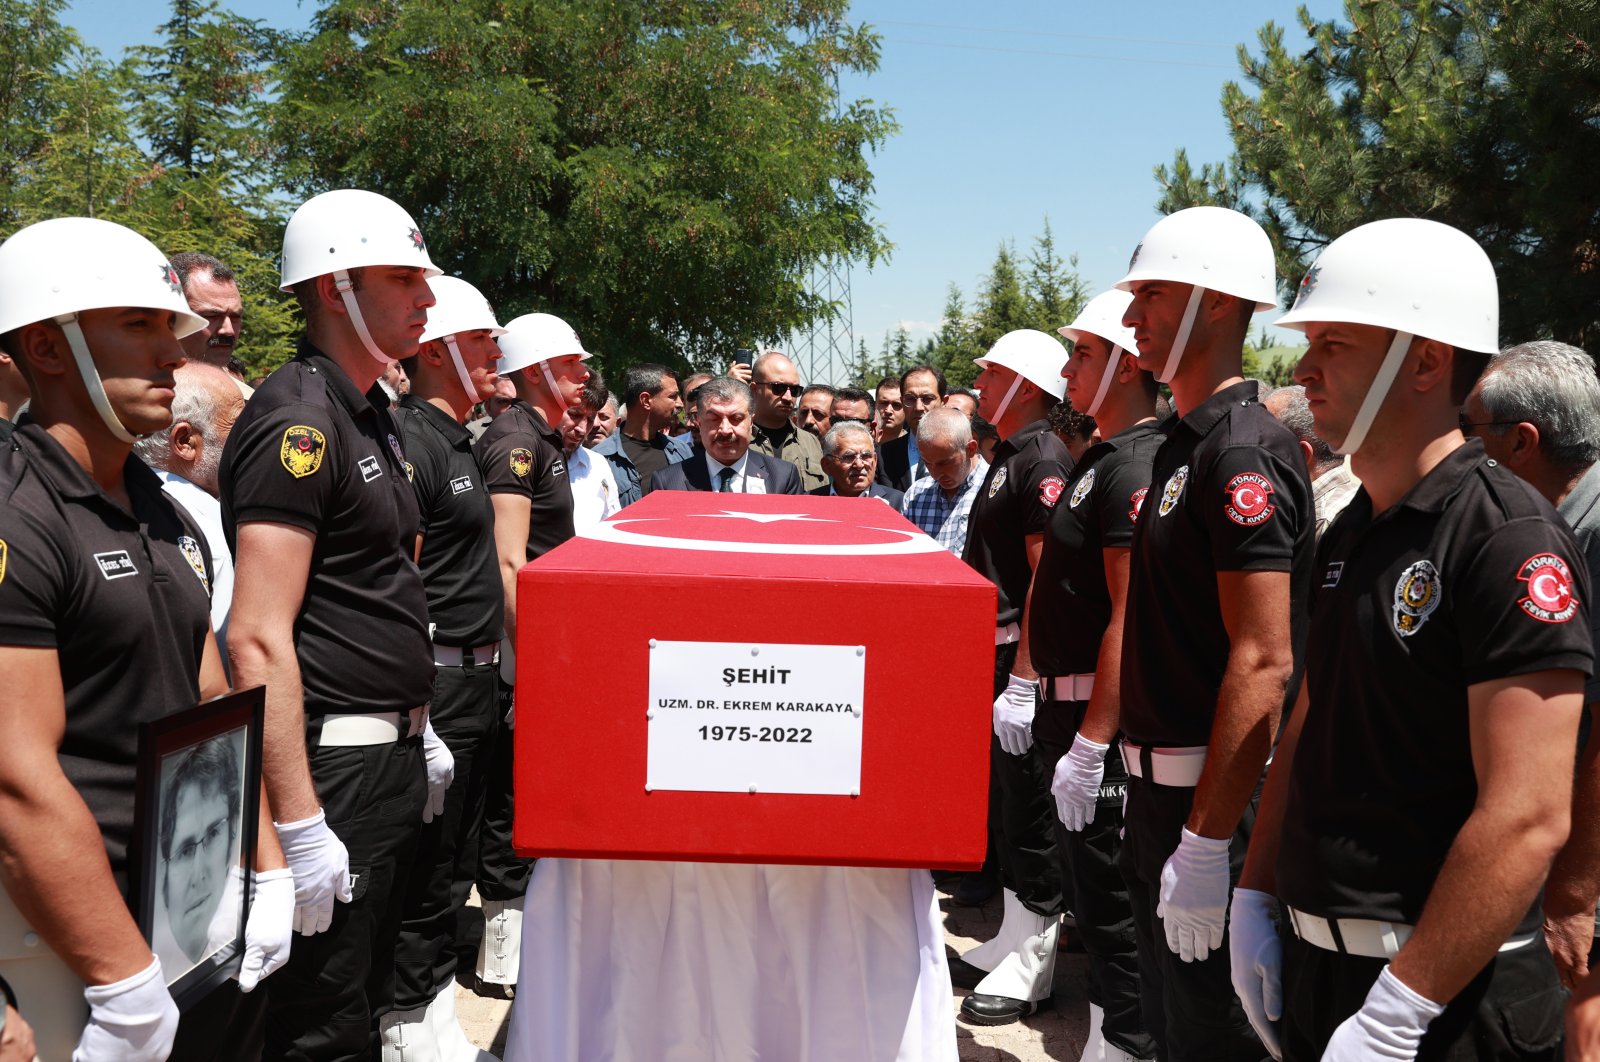 Kematian tragis petugas kesehatan menyebabkan kegemparan di Turki